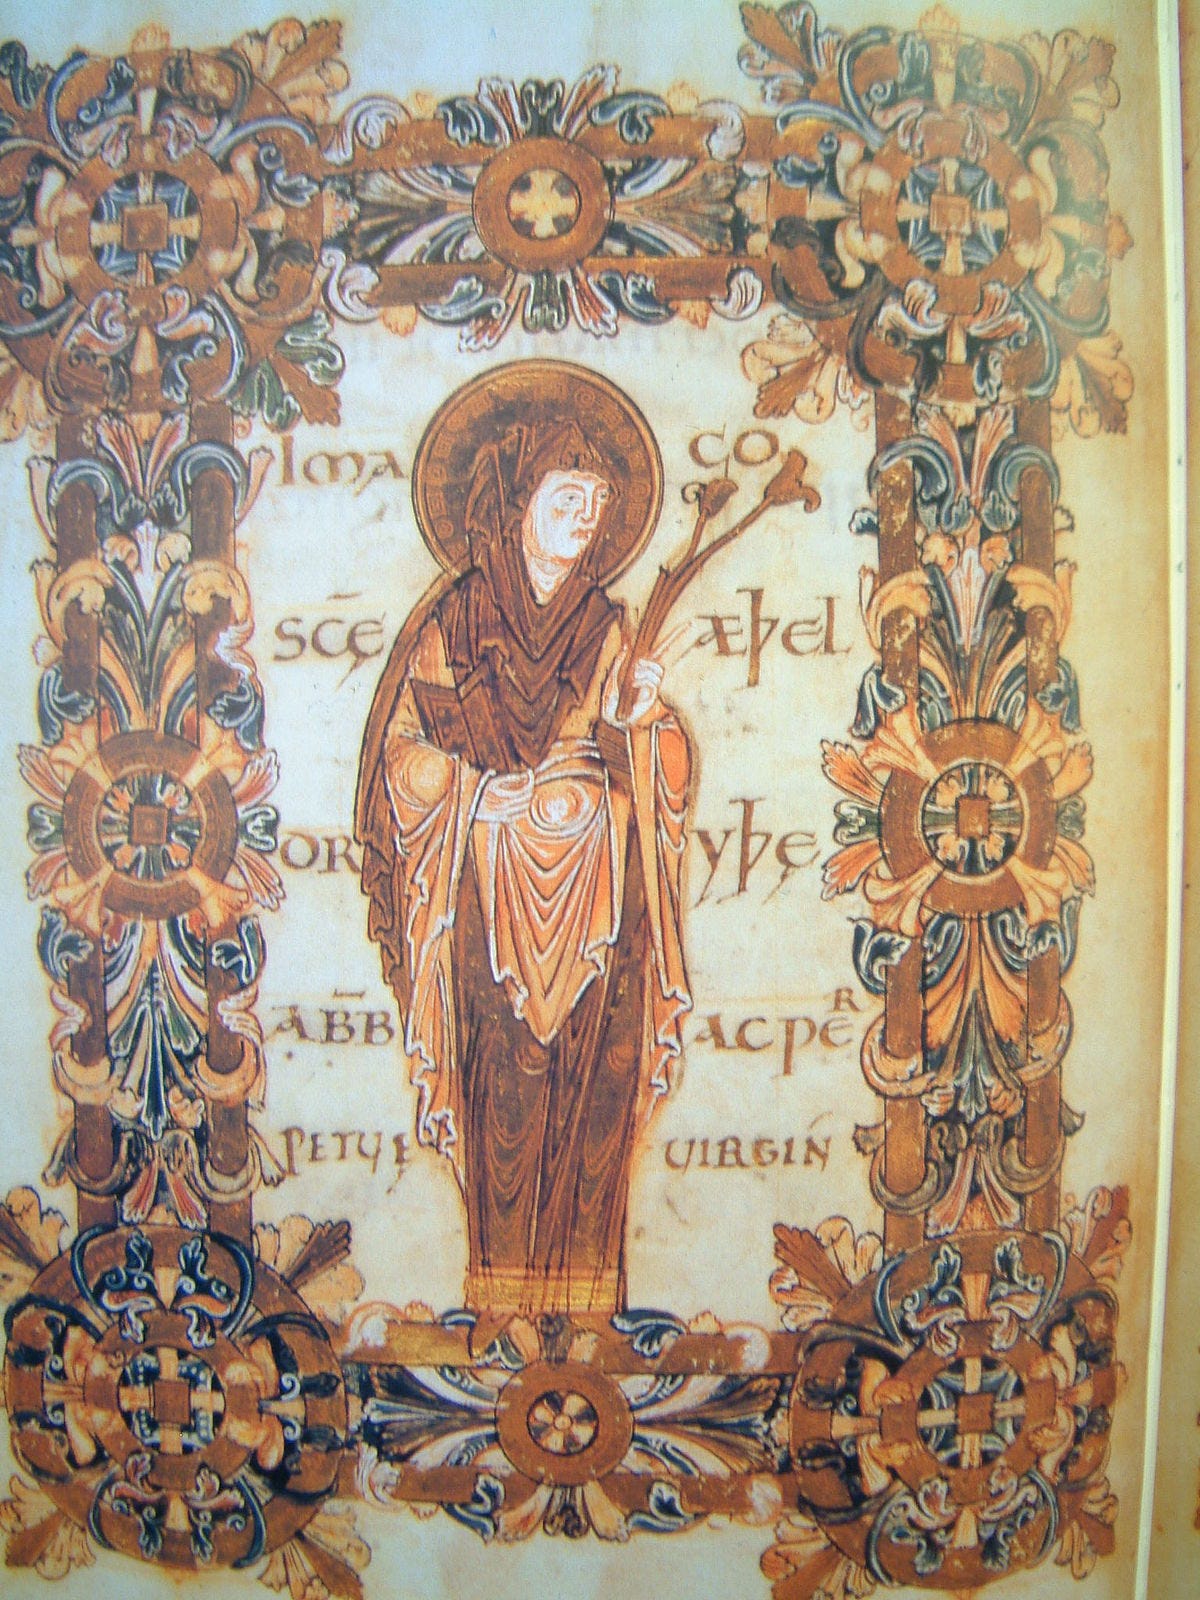 Æthelthryth - Wikipedia